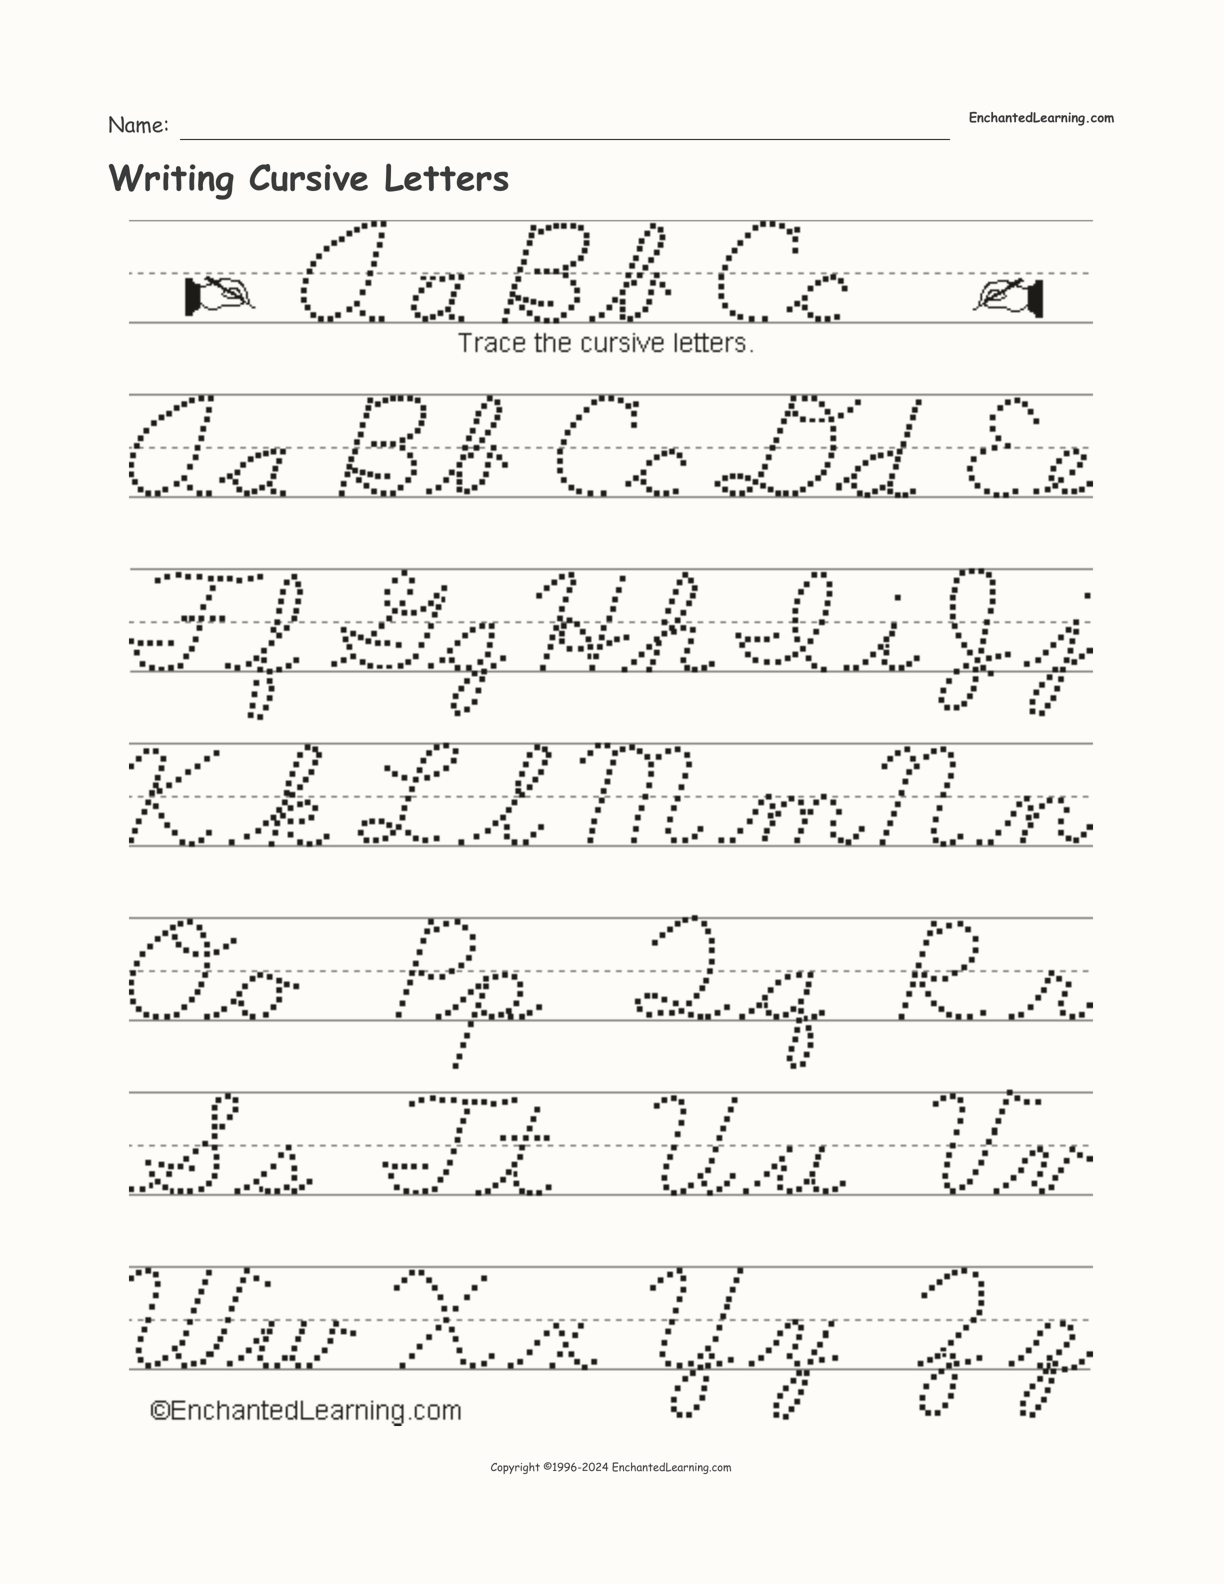 Writing Cursive Letters interactive printout page 1